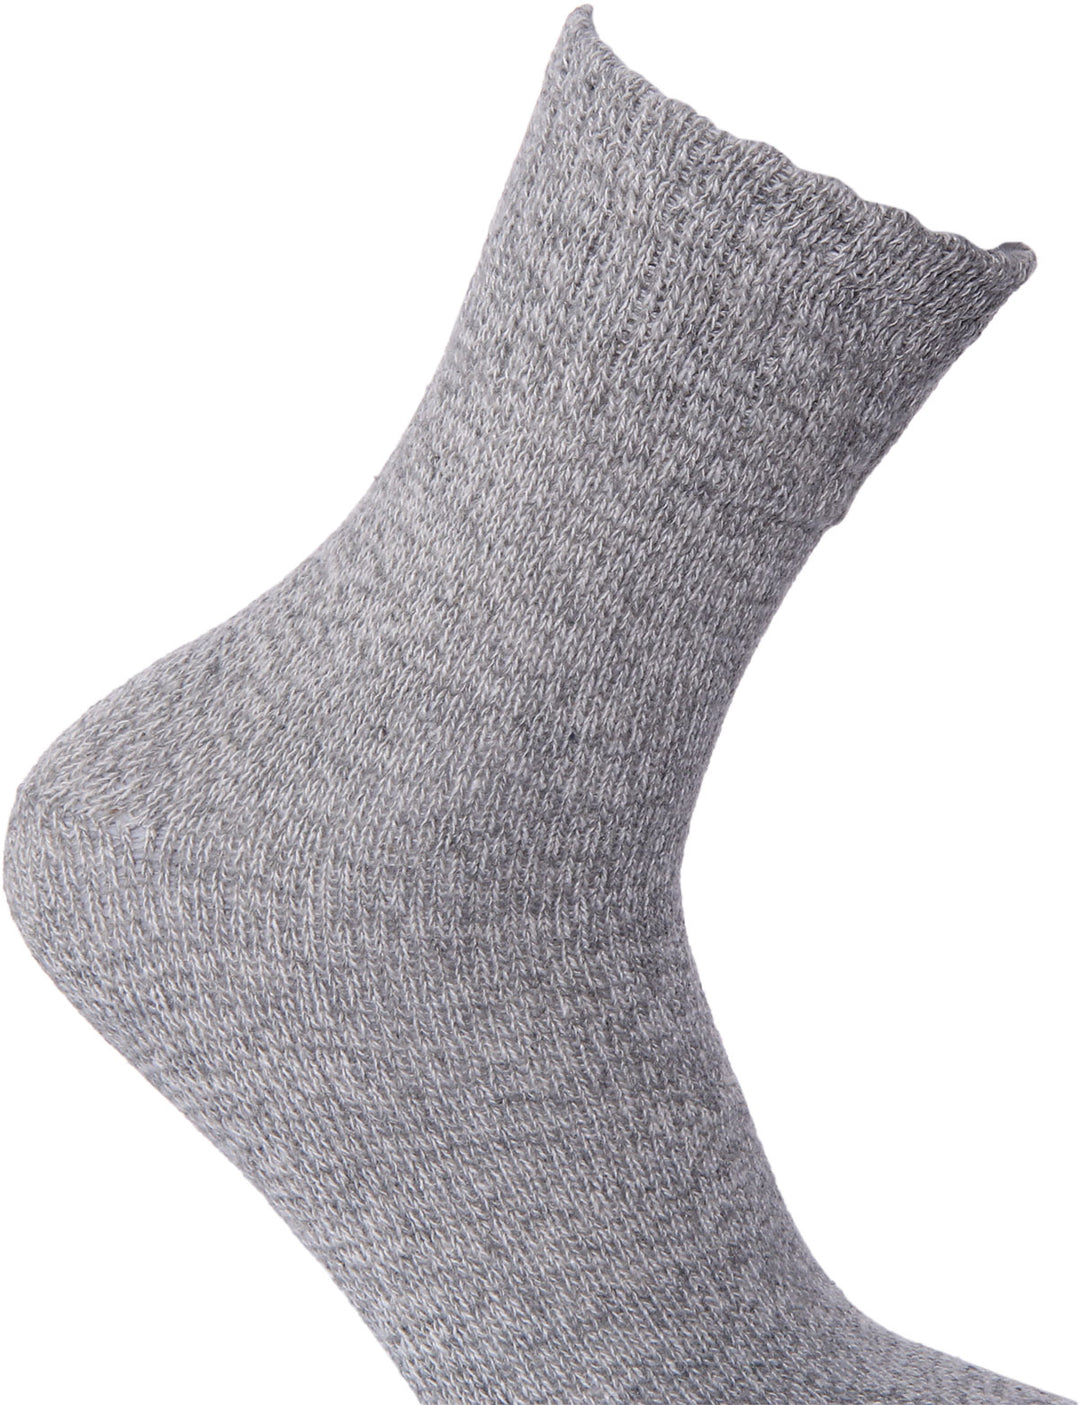 Justinreess England Socks Mens Single Crew Blend Socks In Light Grey